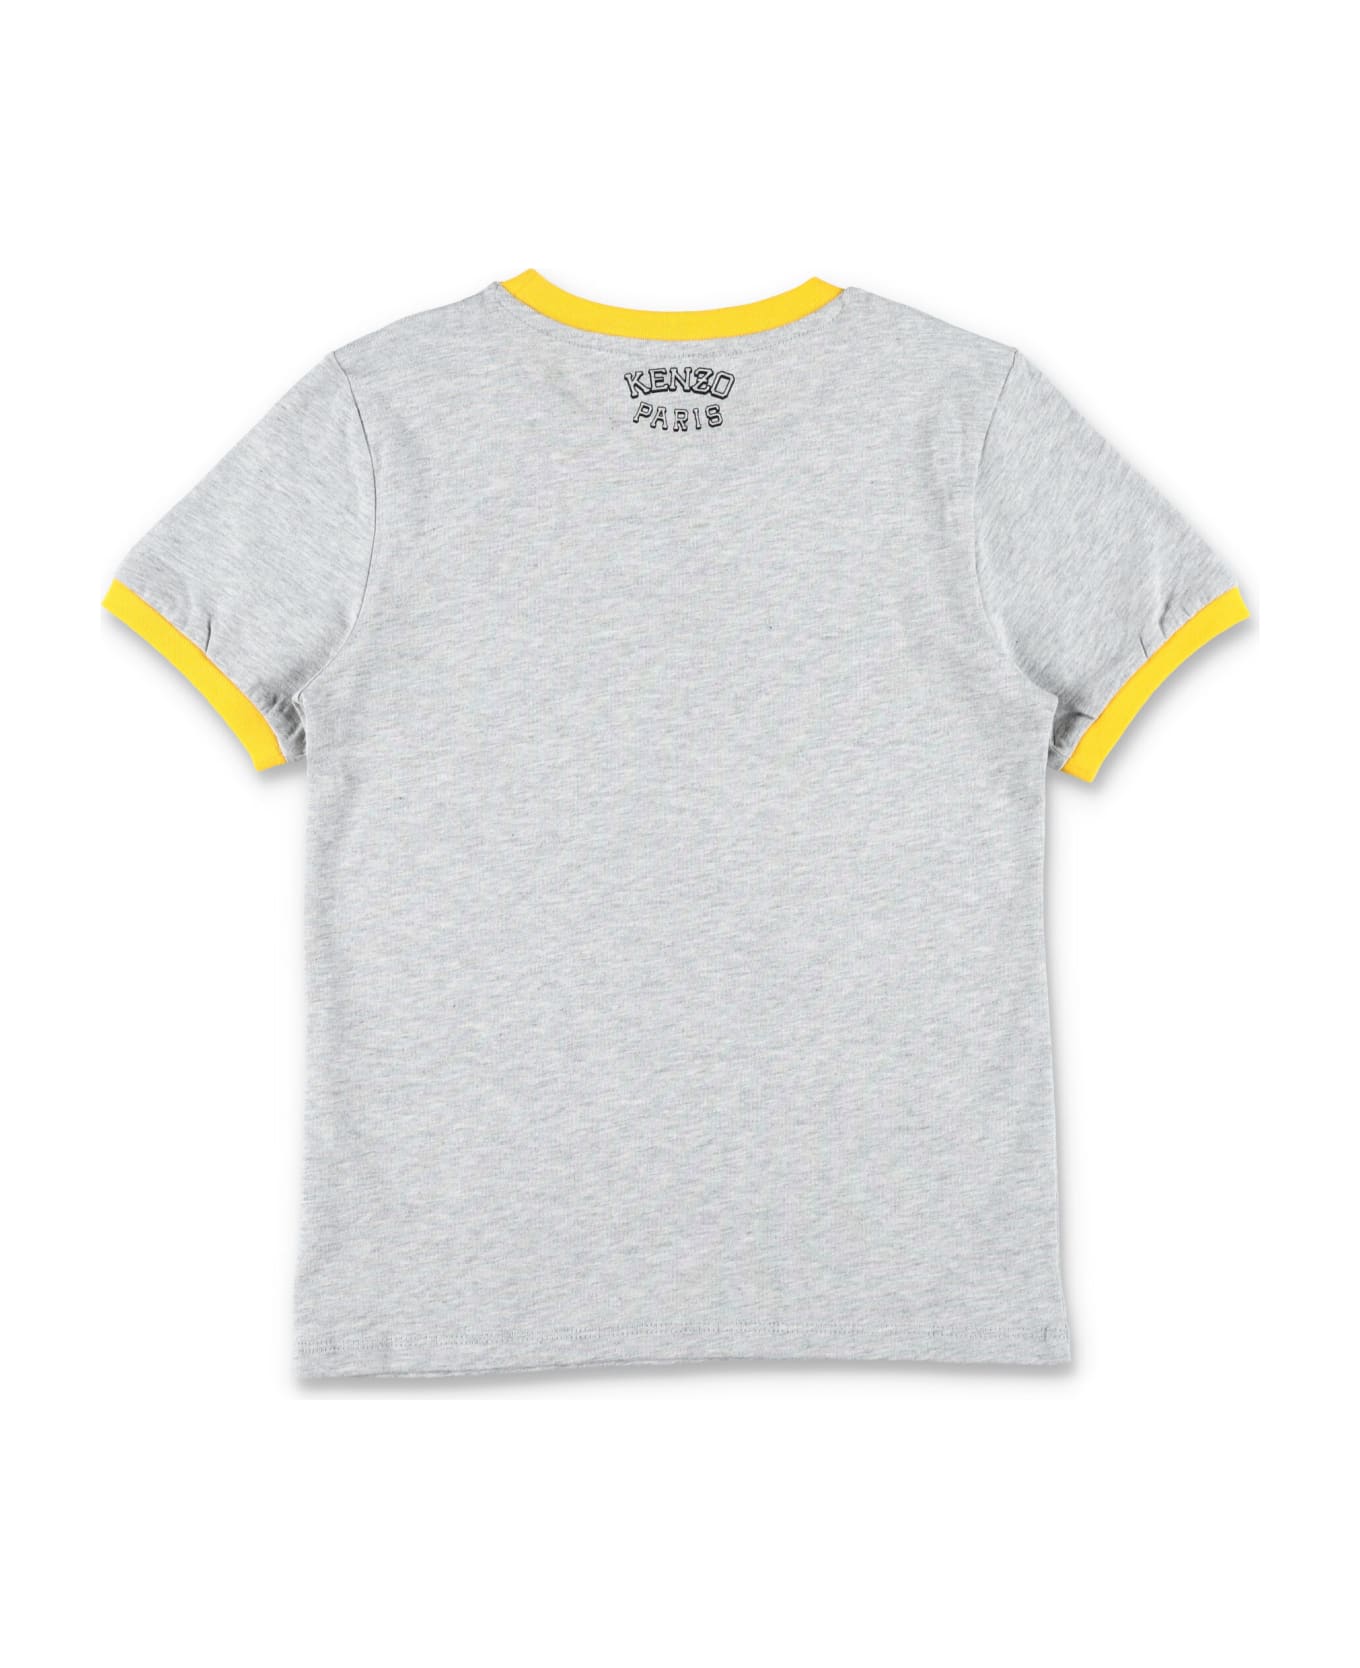 Kenzo Kids Tiger T-shirt - GREY MARL